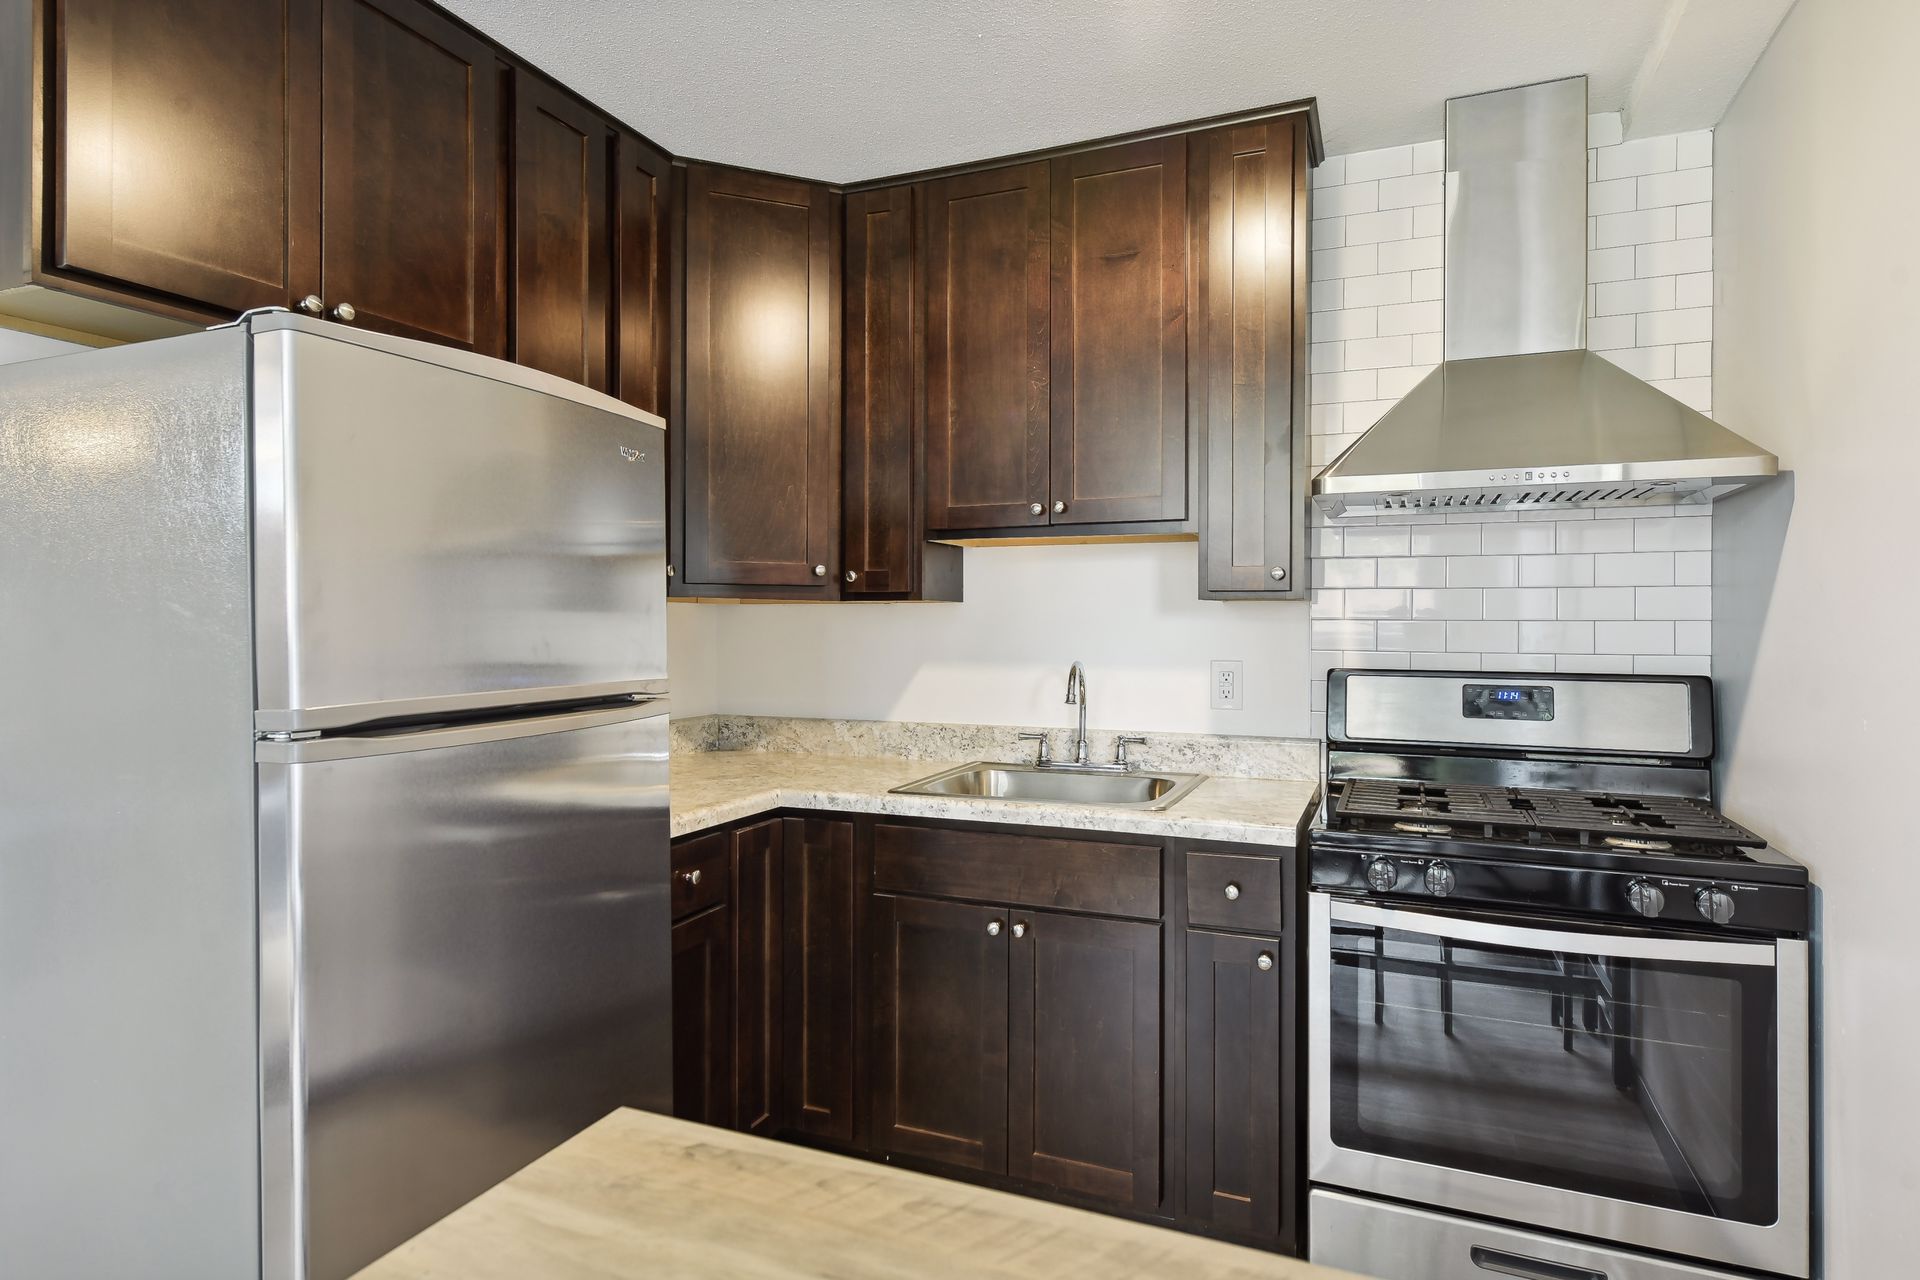 Studio apartment kitchen with full-szied appliances